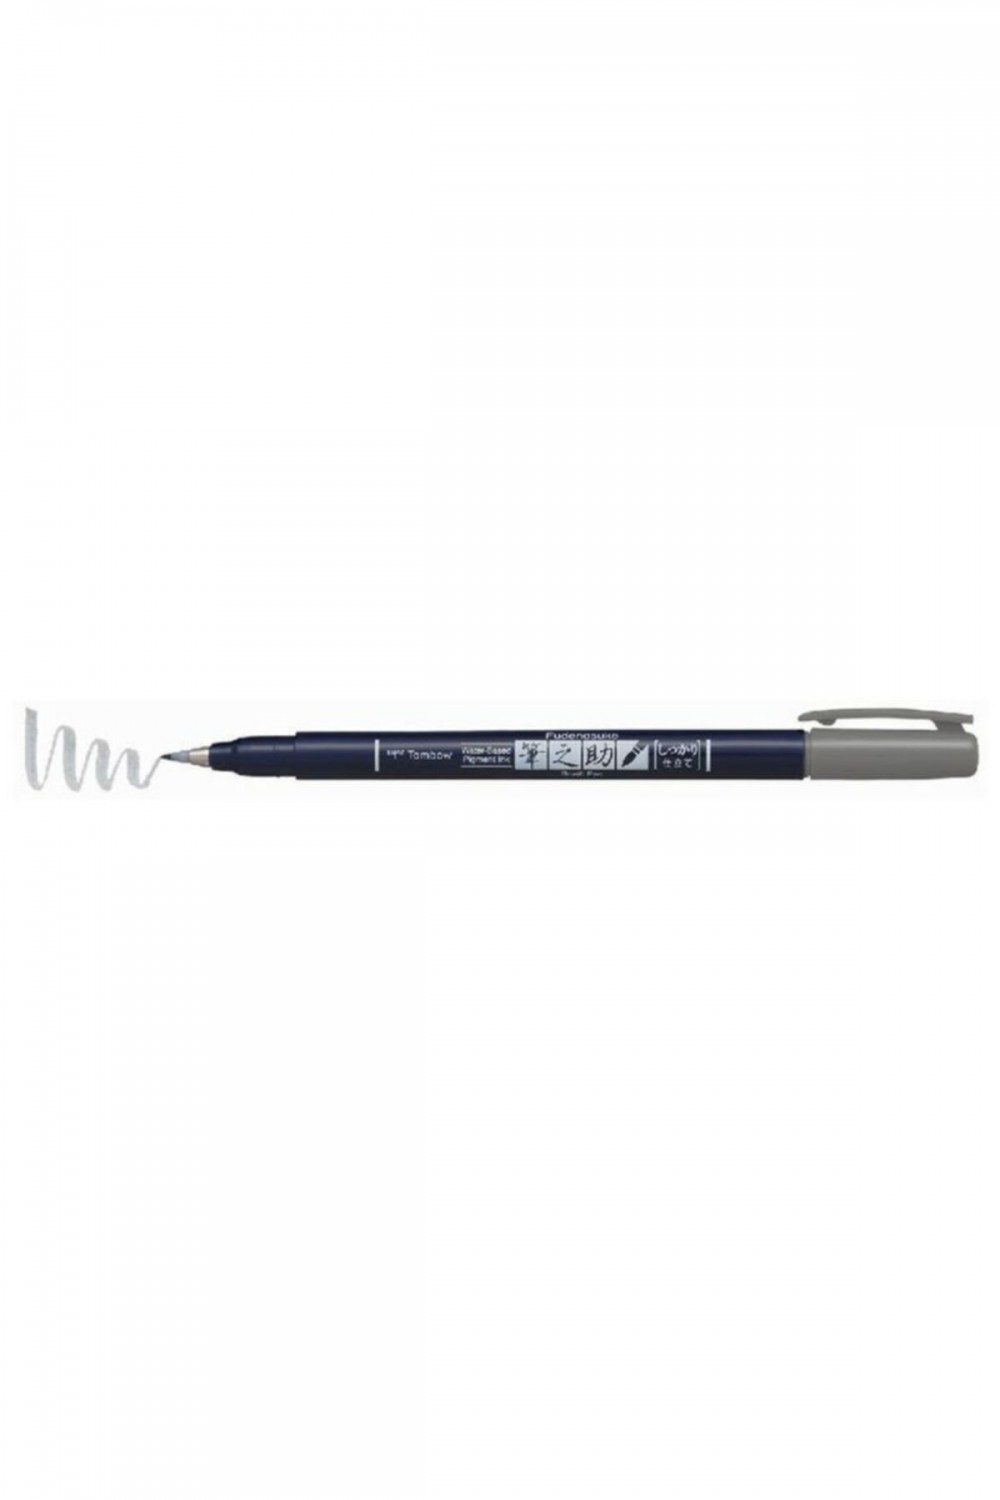 Tombow Fudenosuke Brush Pen Fırça Uçlu Kalem Sert Uç - Gri